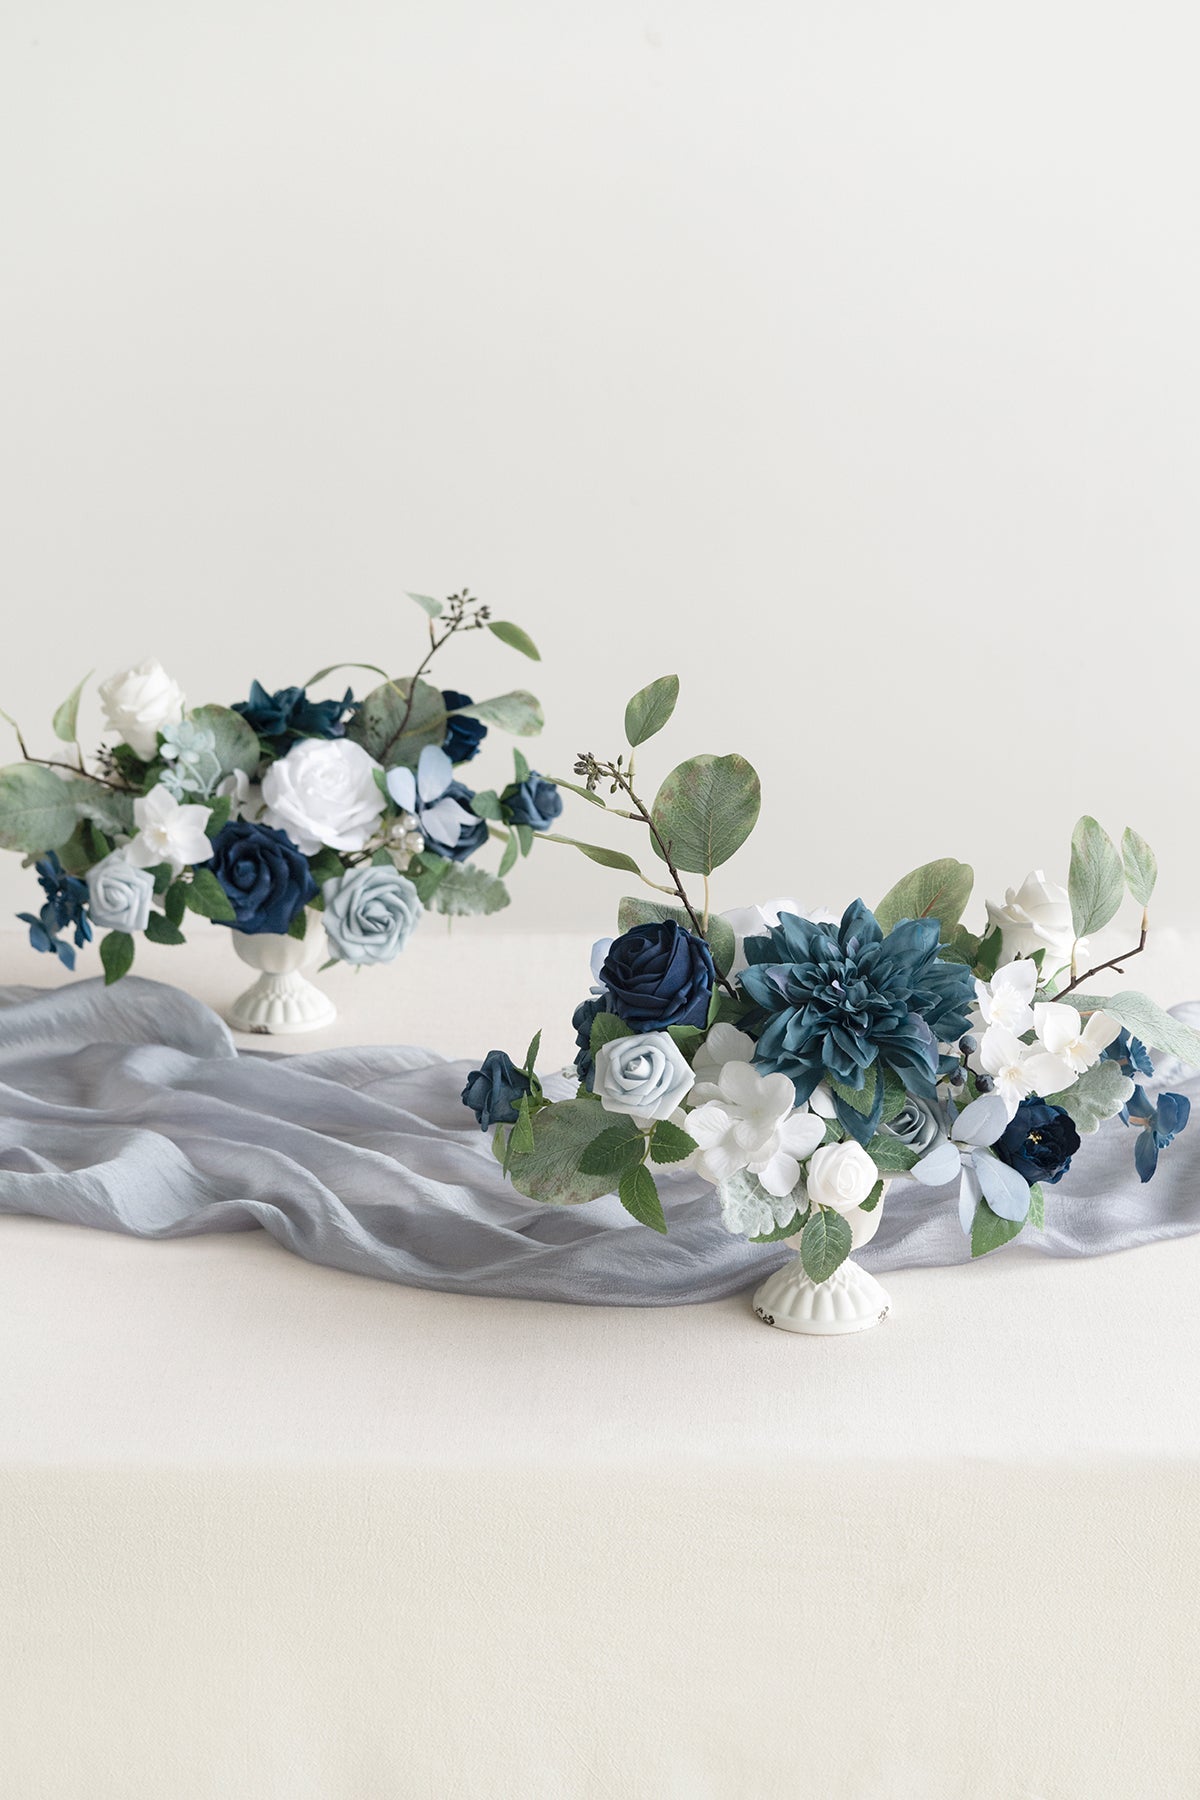 Flash Sale | Large Floral Centerpiece Set in Dusty Blue & Navy